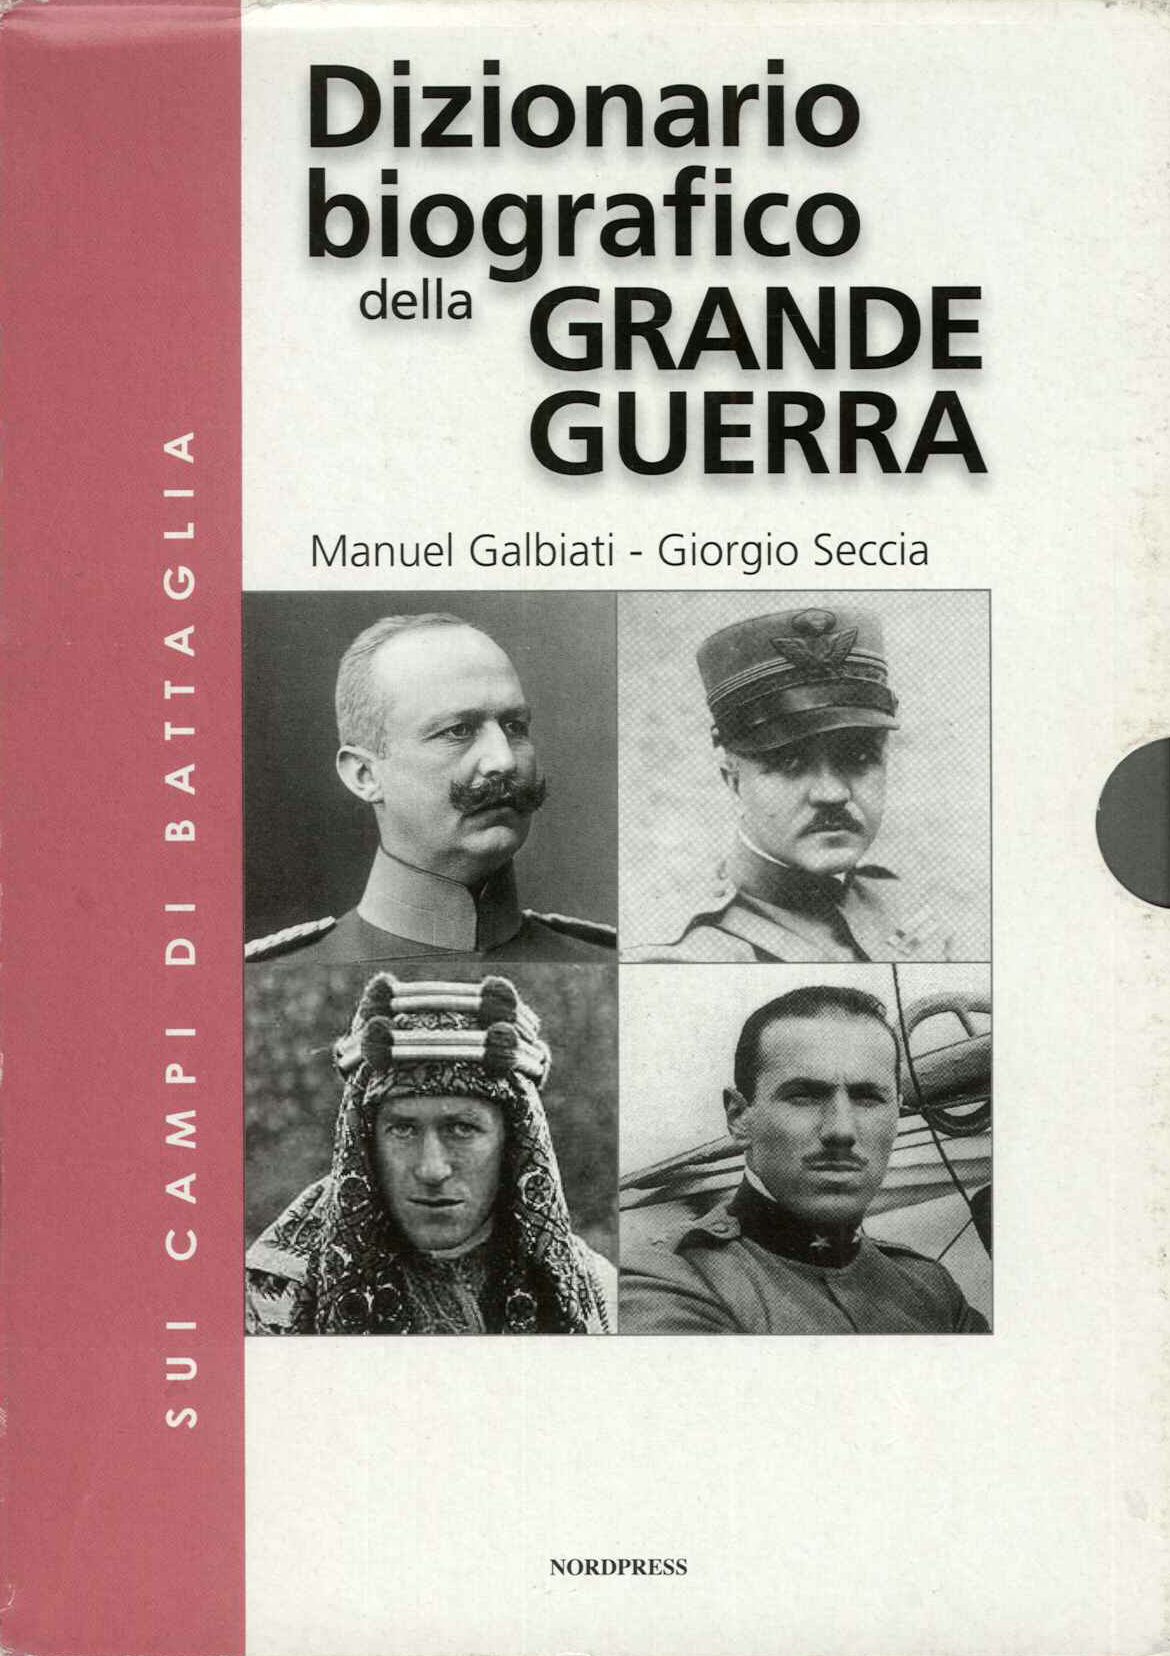 Dizionario biografico della grande guerra